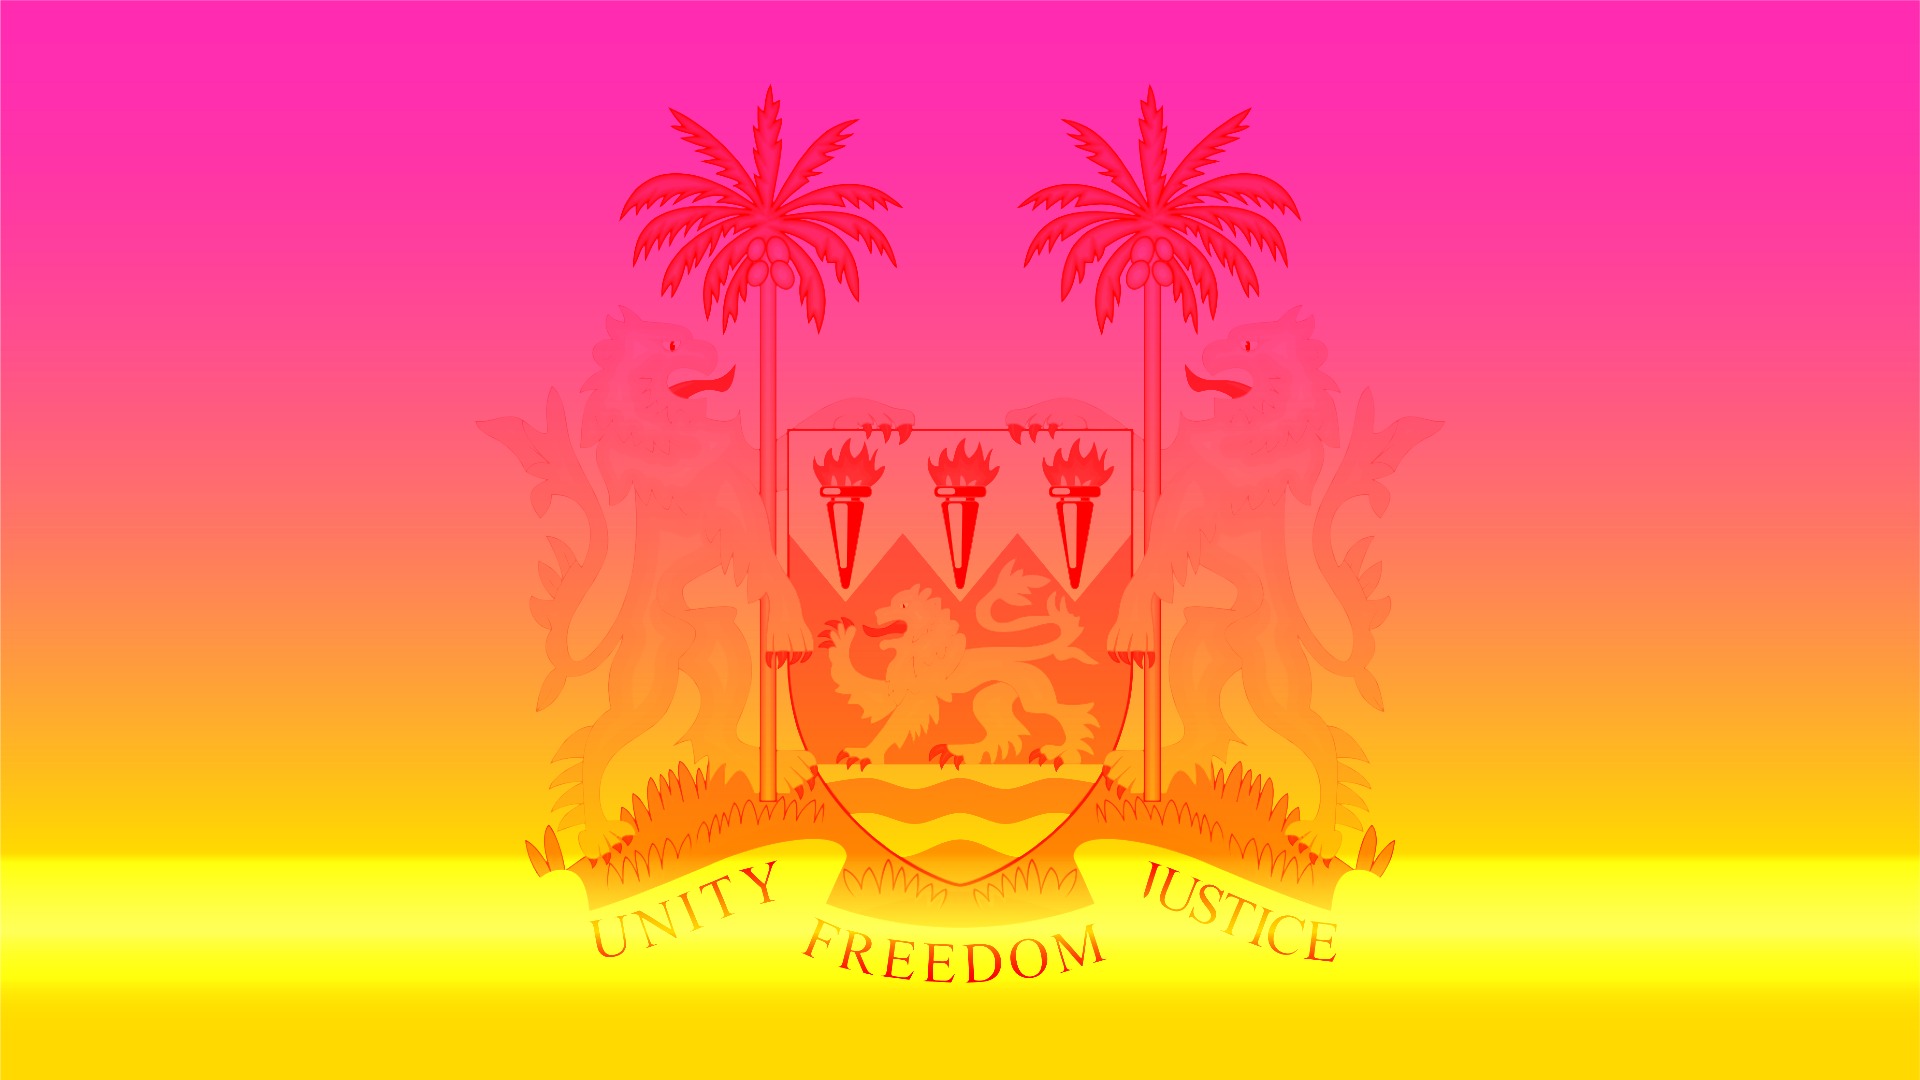 Sierra Leone coat of arms